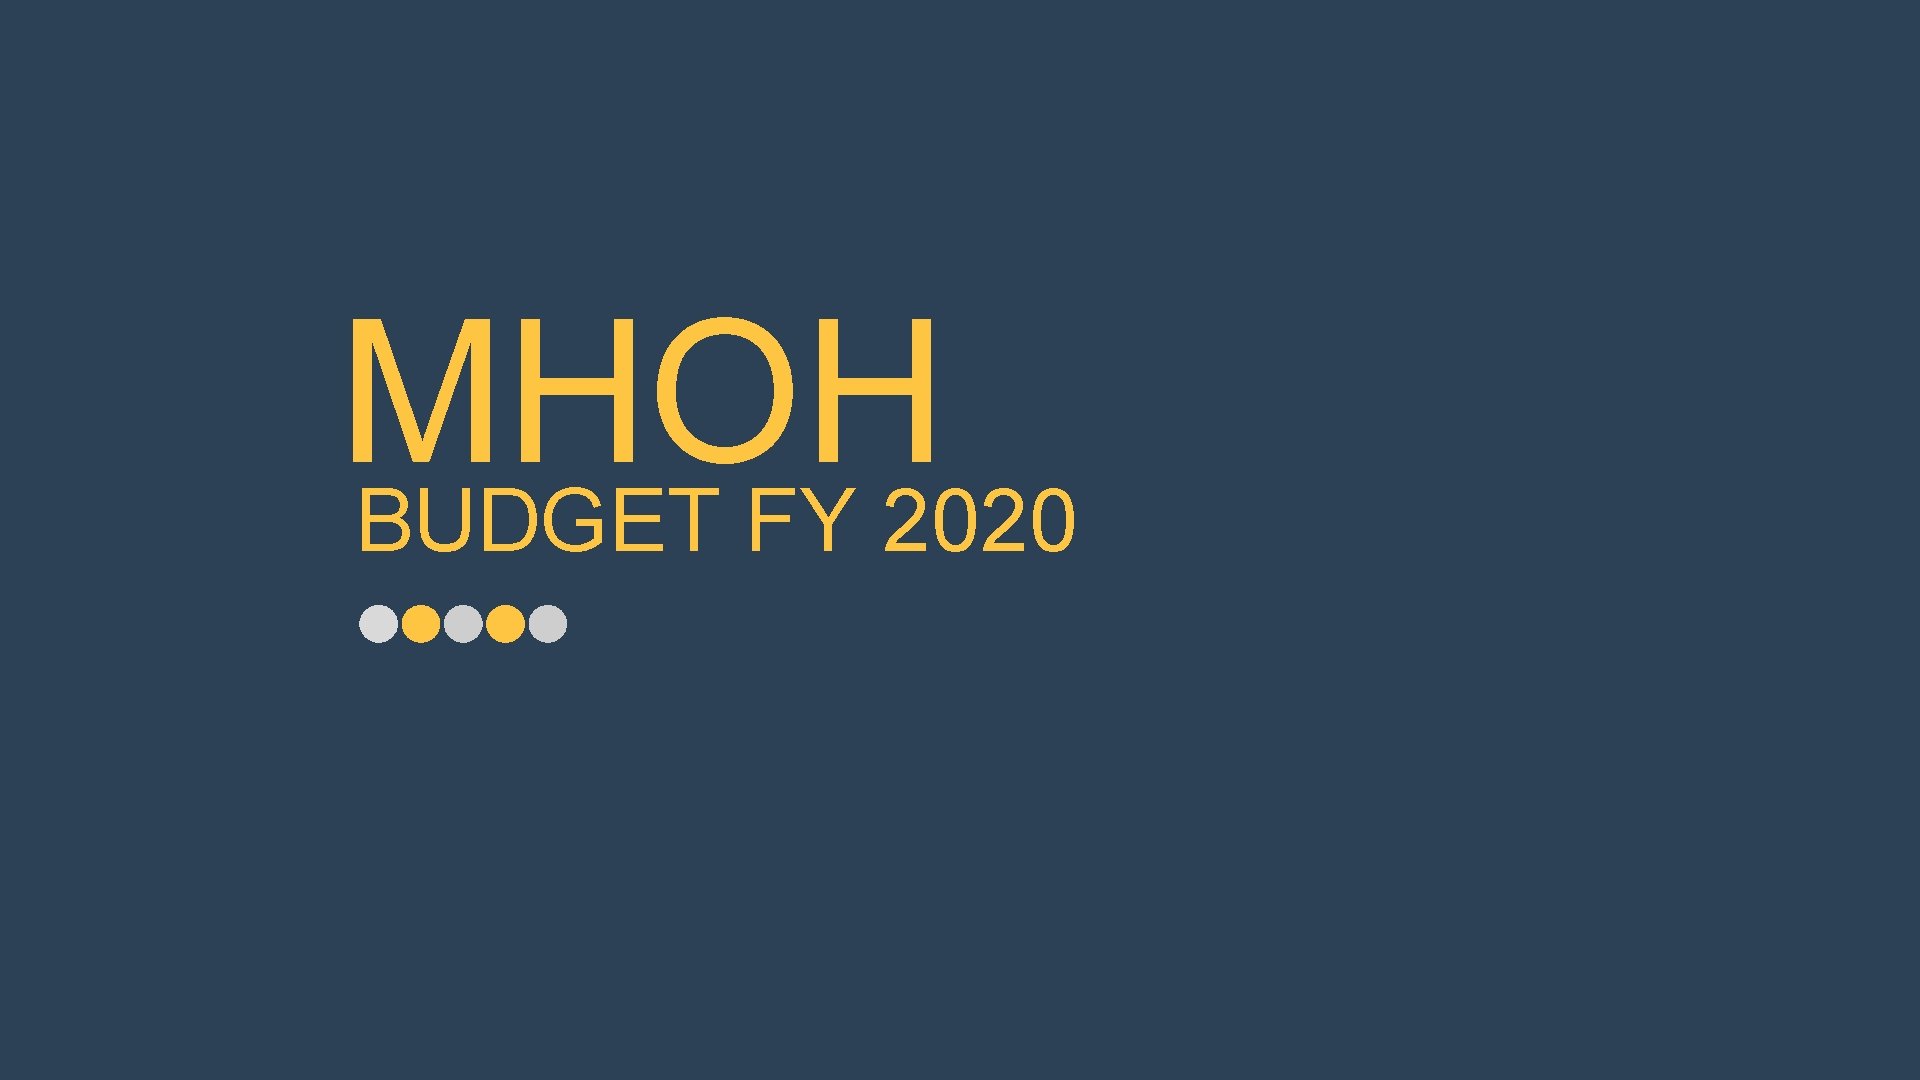 MHOH BUDGET FY 2020 